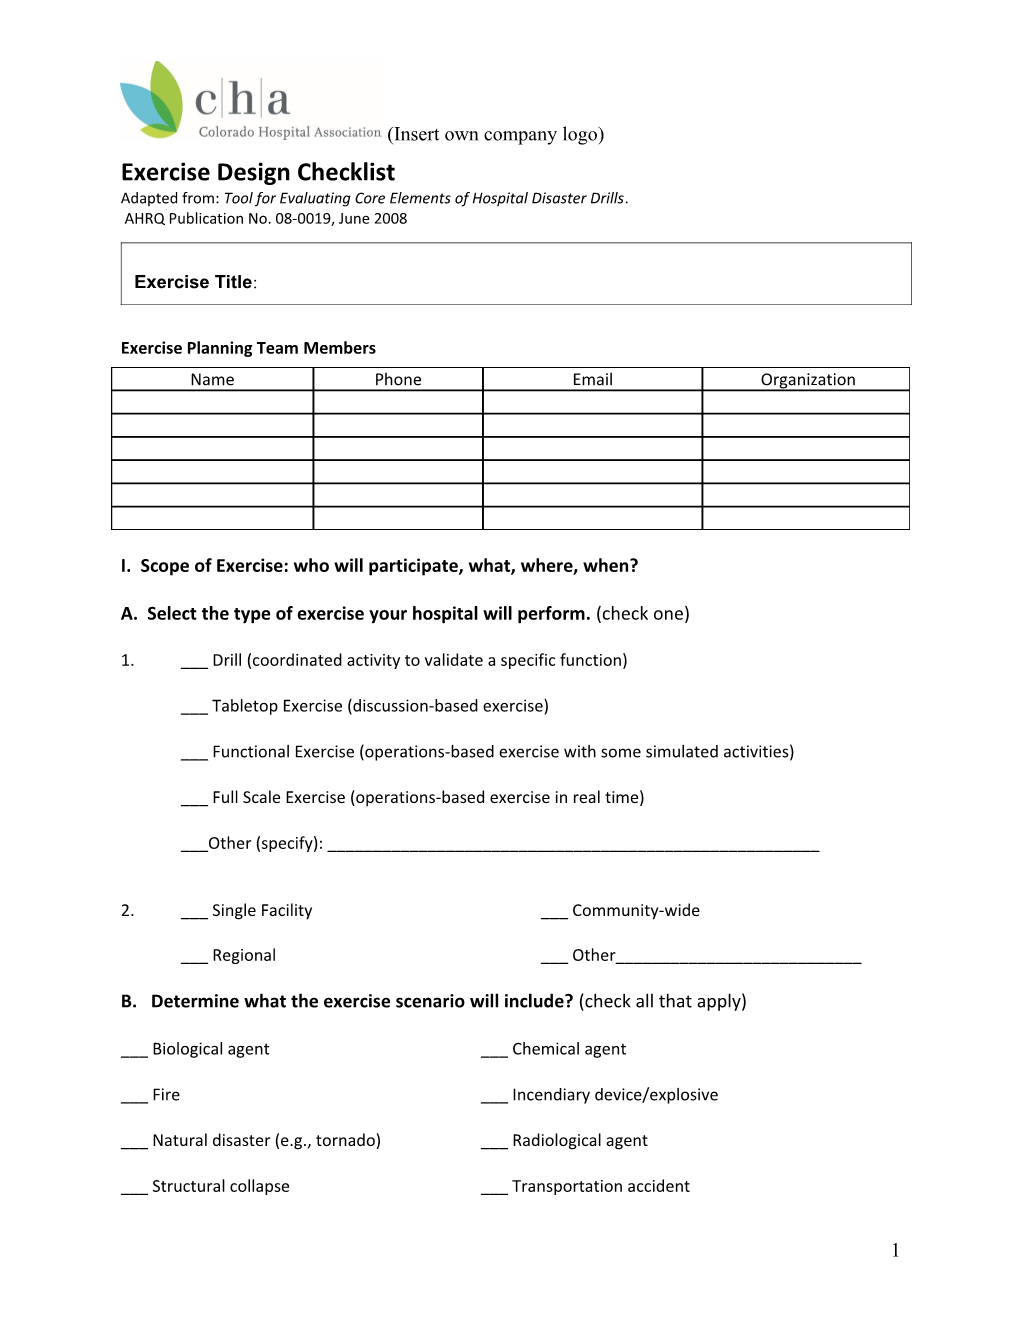 Exercise Design Checklist